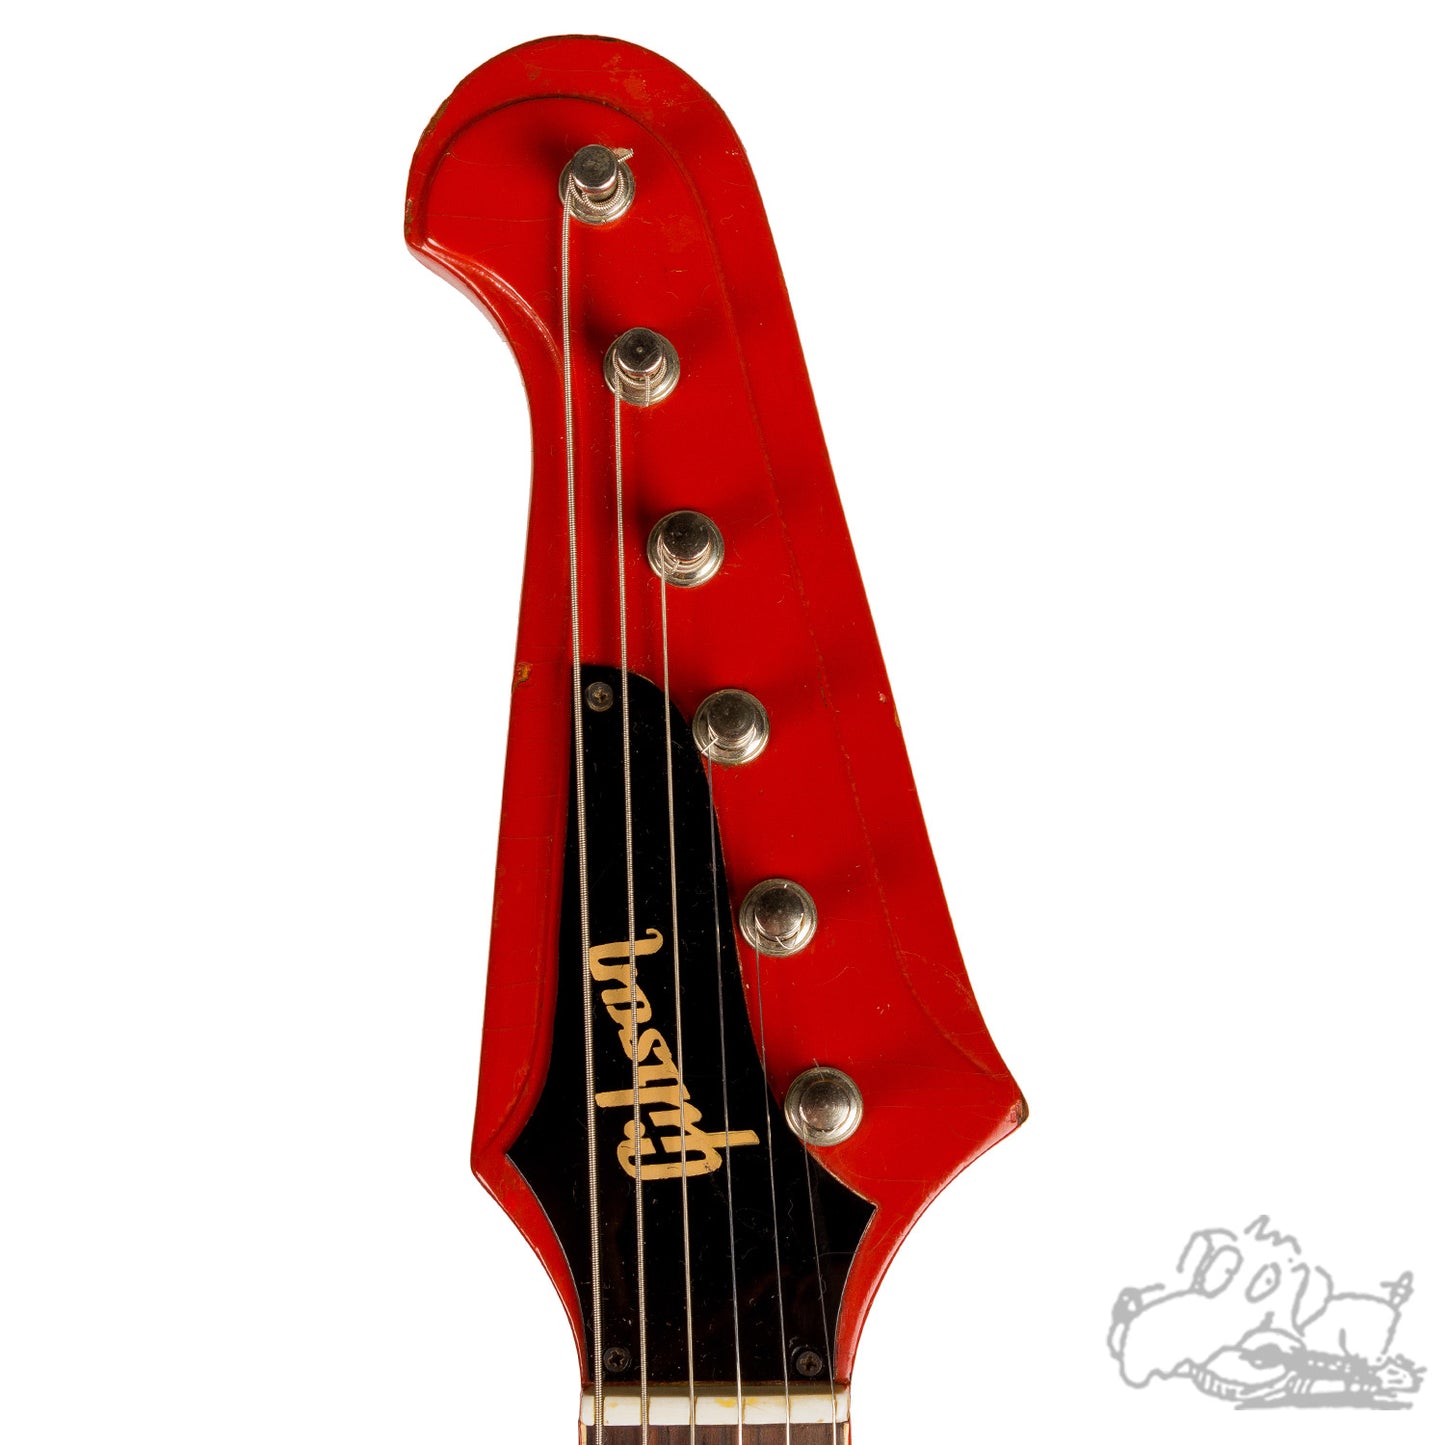 1965 Gibson Firebird III in Ember Red